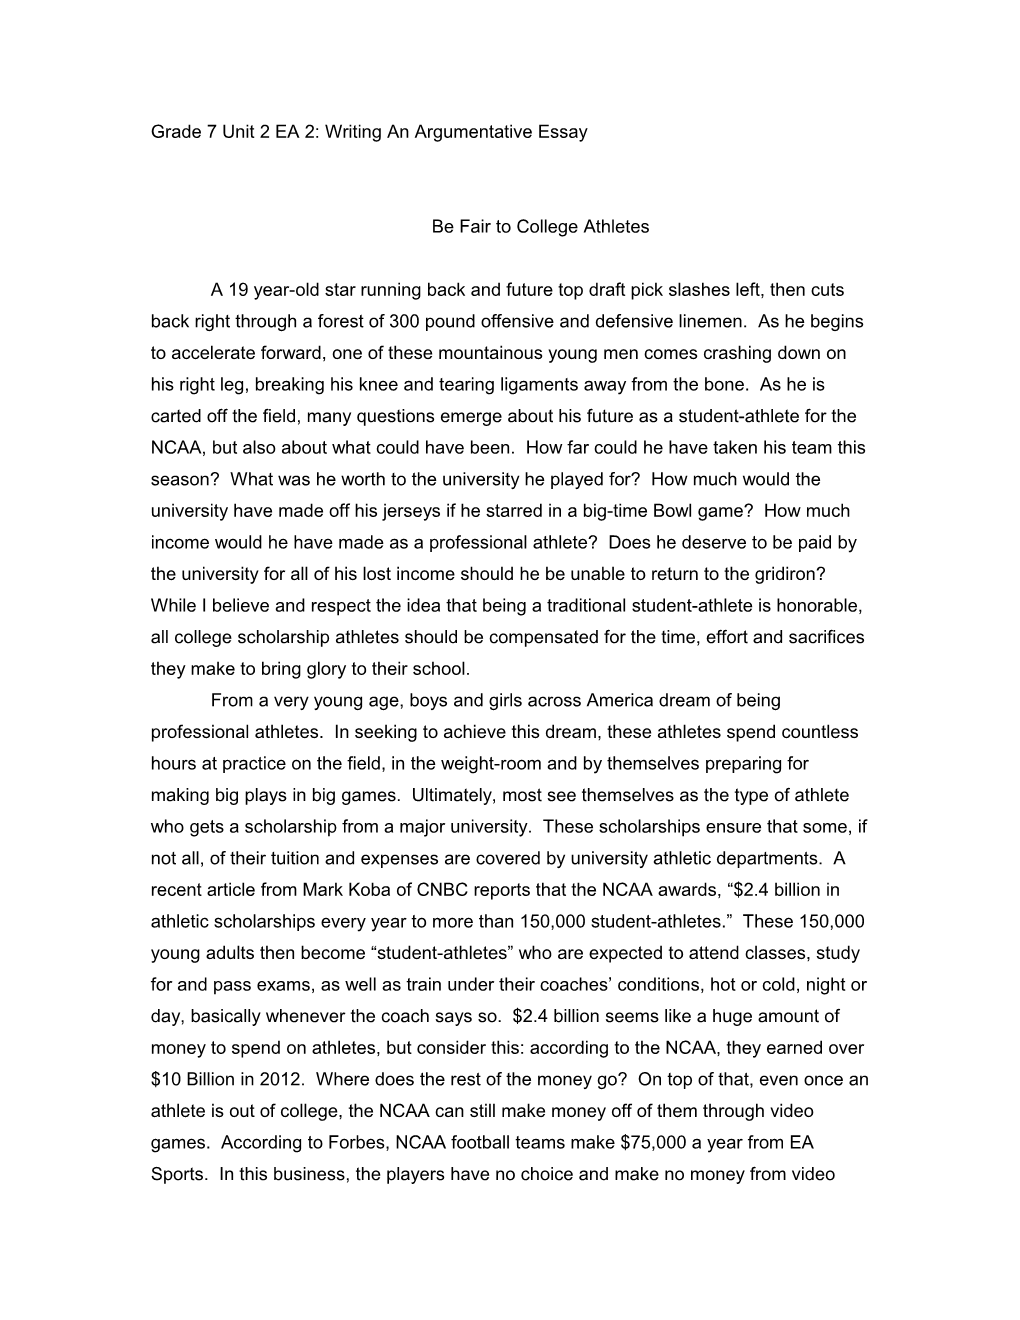 Grade 7 Unit 2 EA 2: Writing an Argumentative Essay